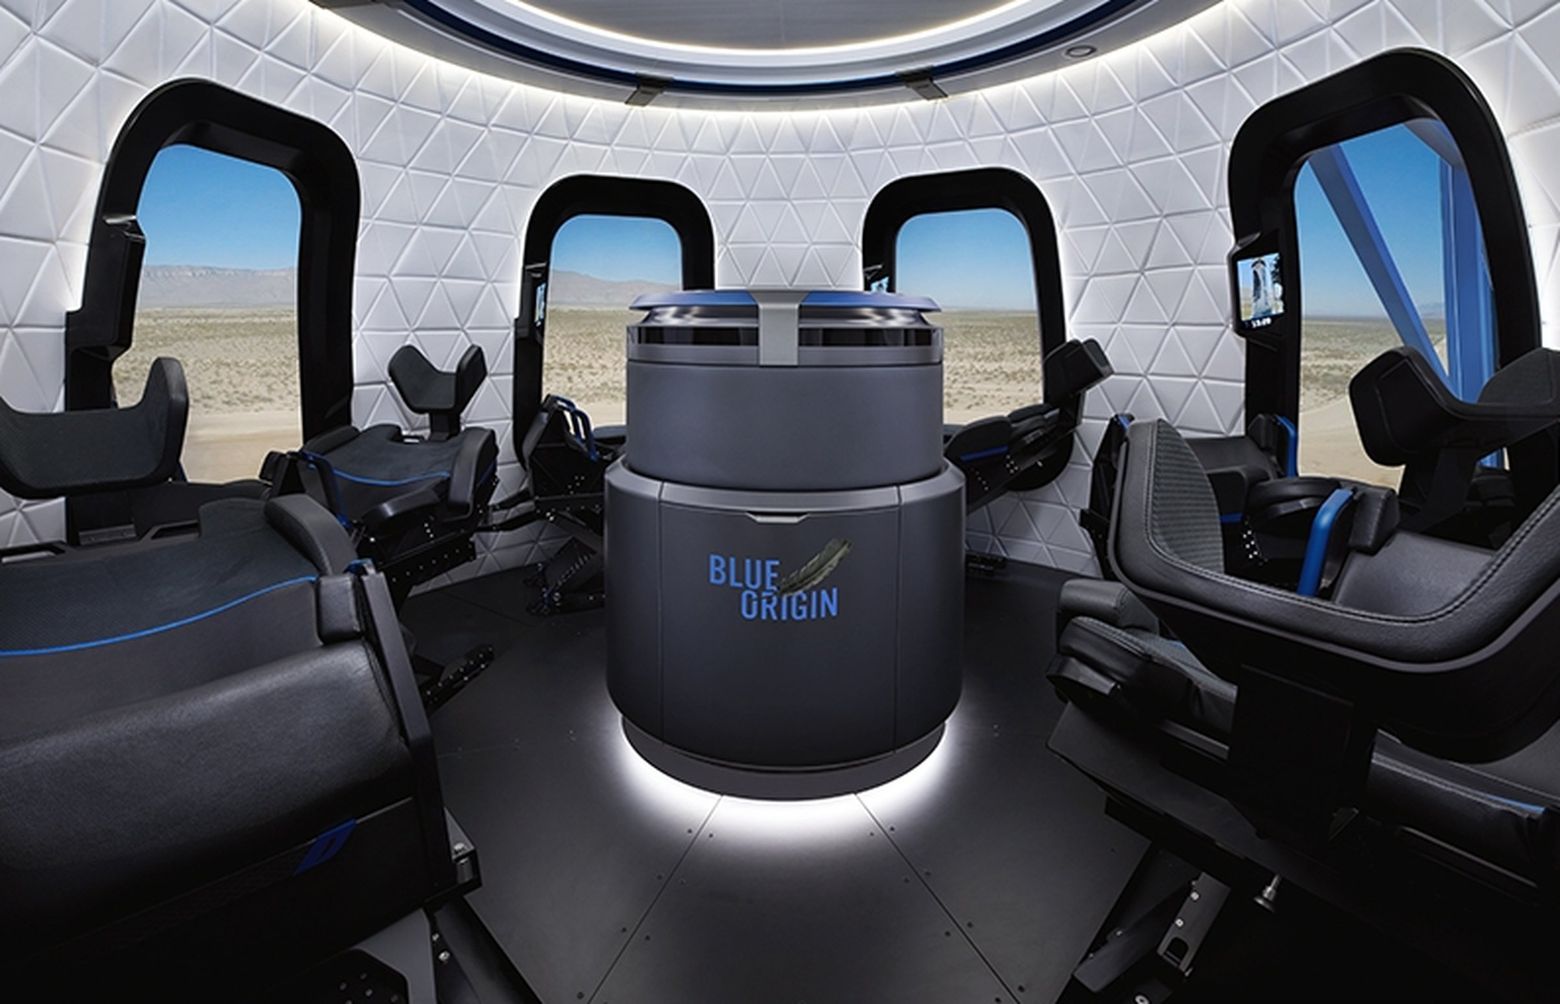 Jeff Bezos’ Blue Origin reveals photos of capsule that could send tourists into space